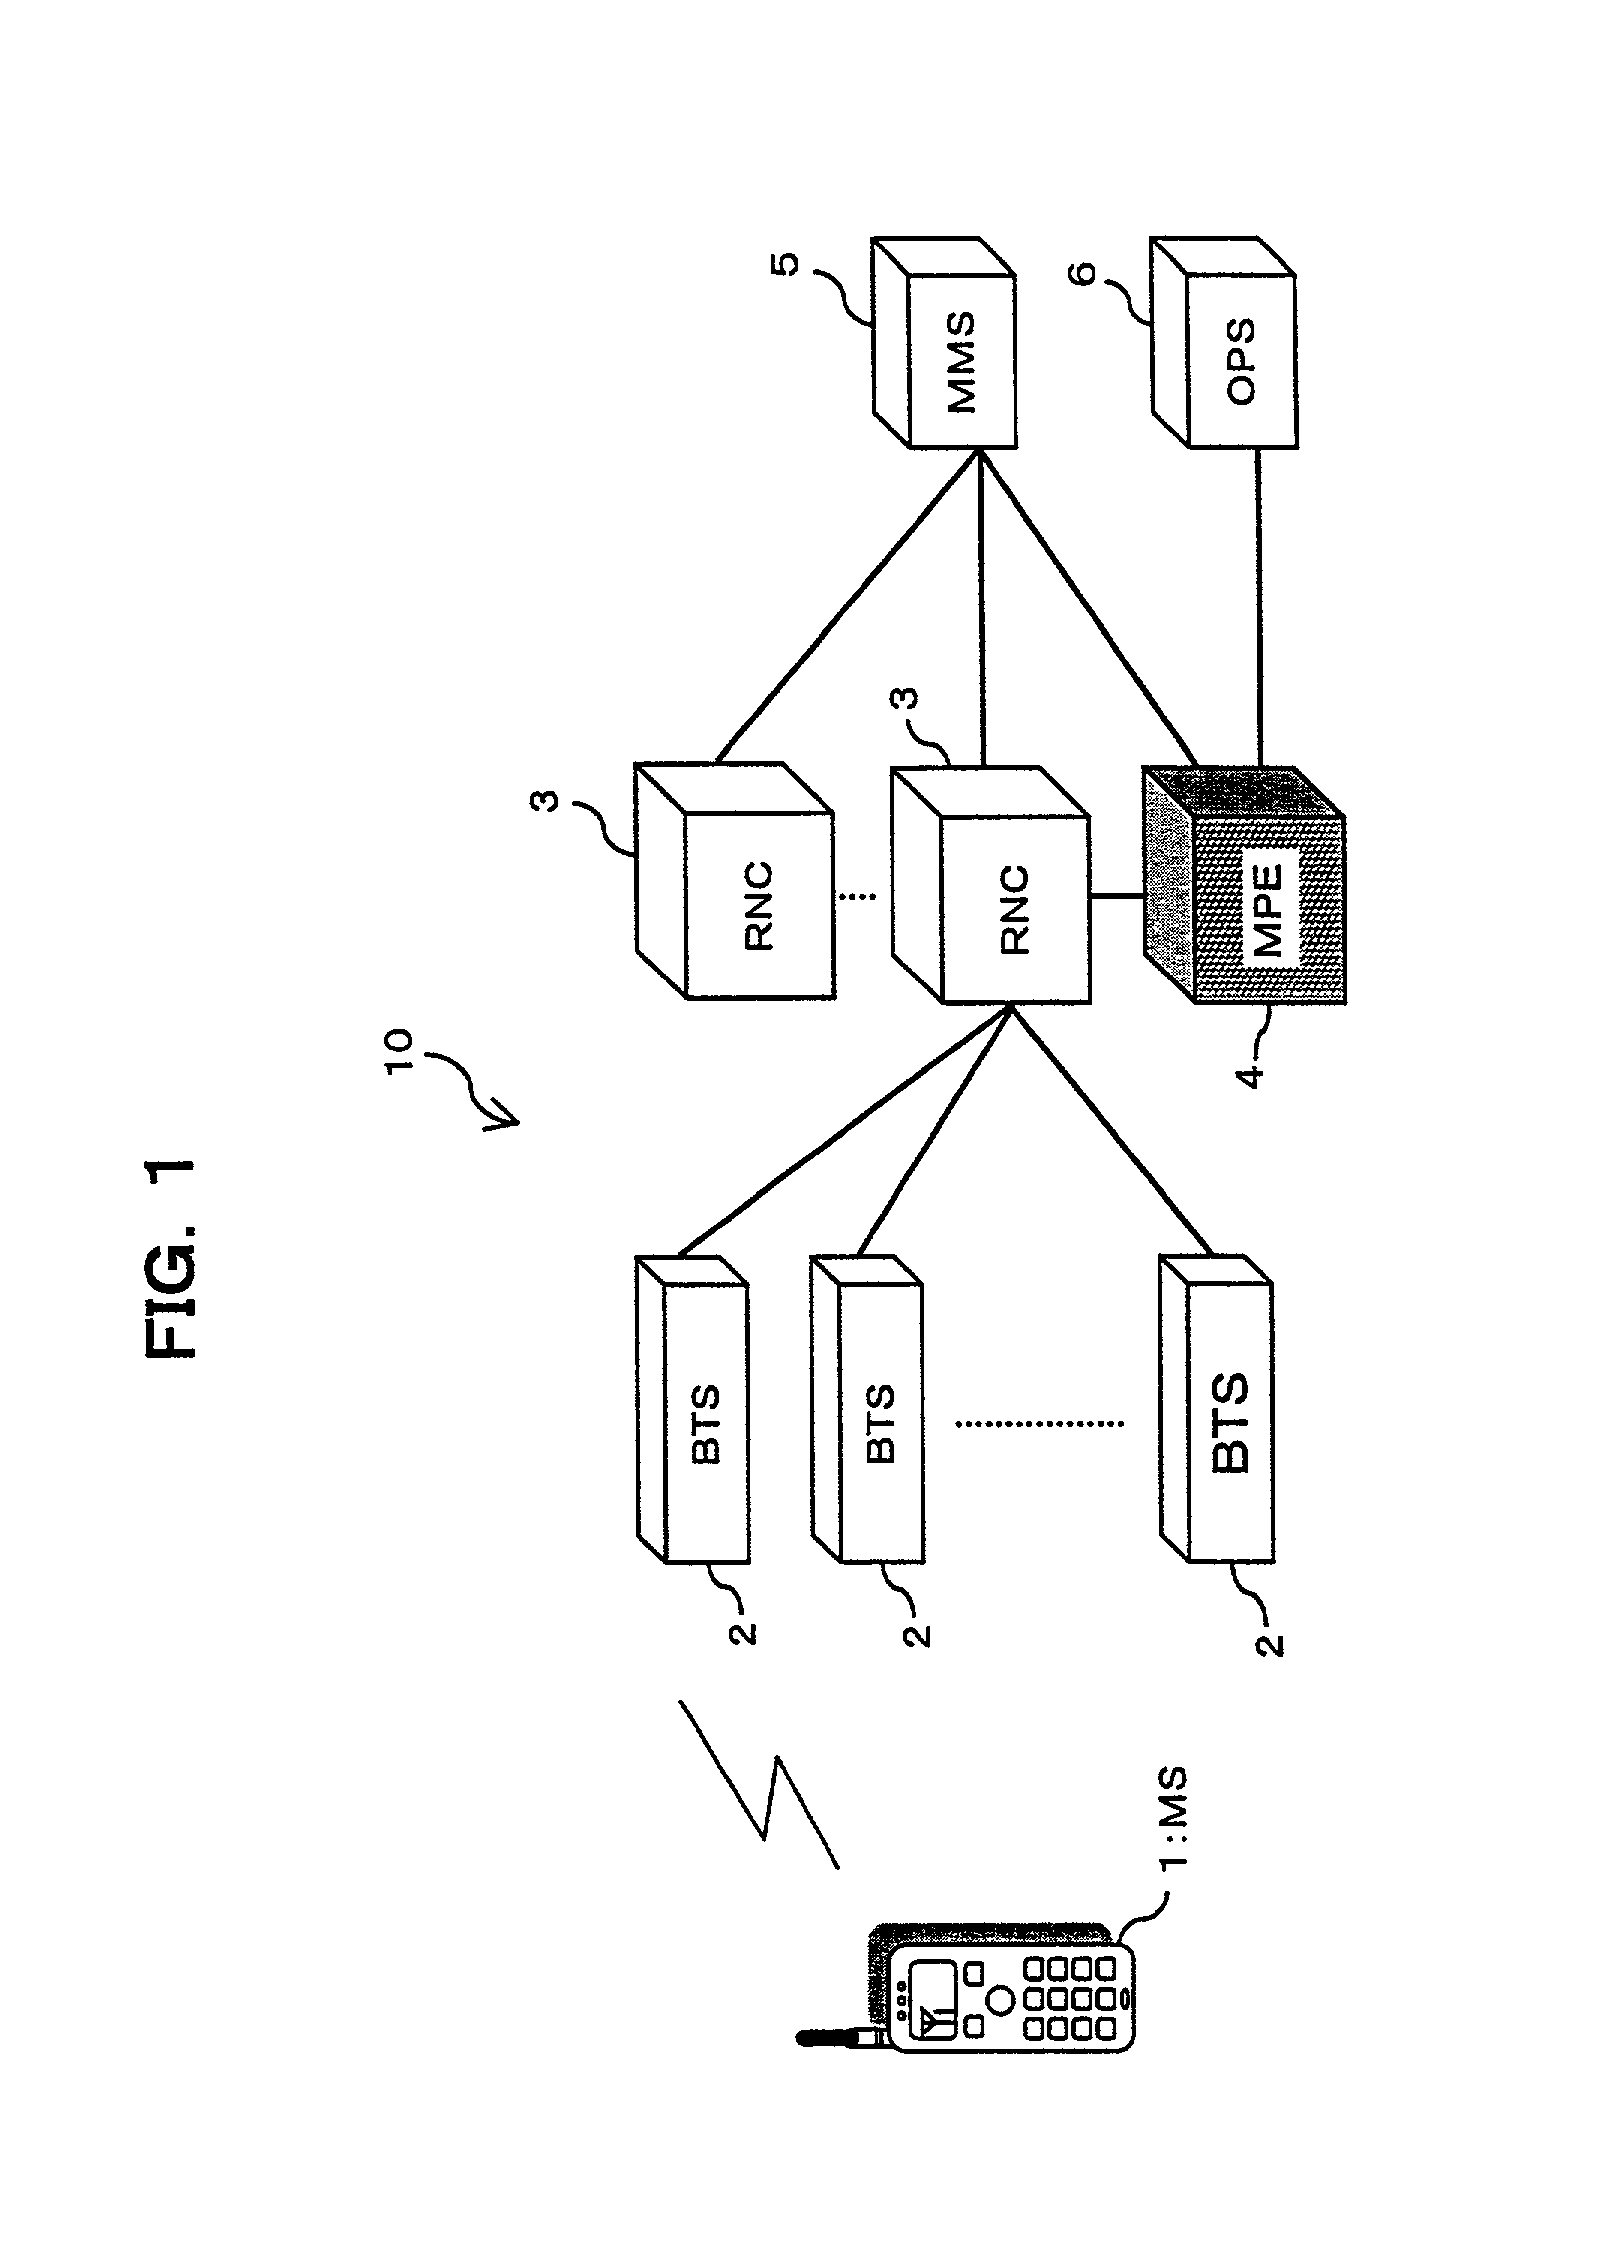 Multimedia signal processing apparatus